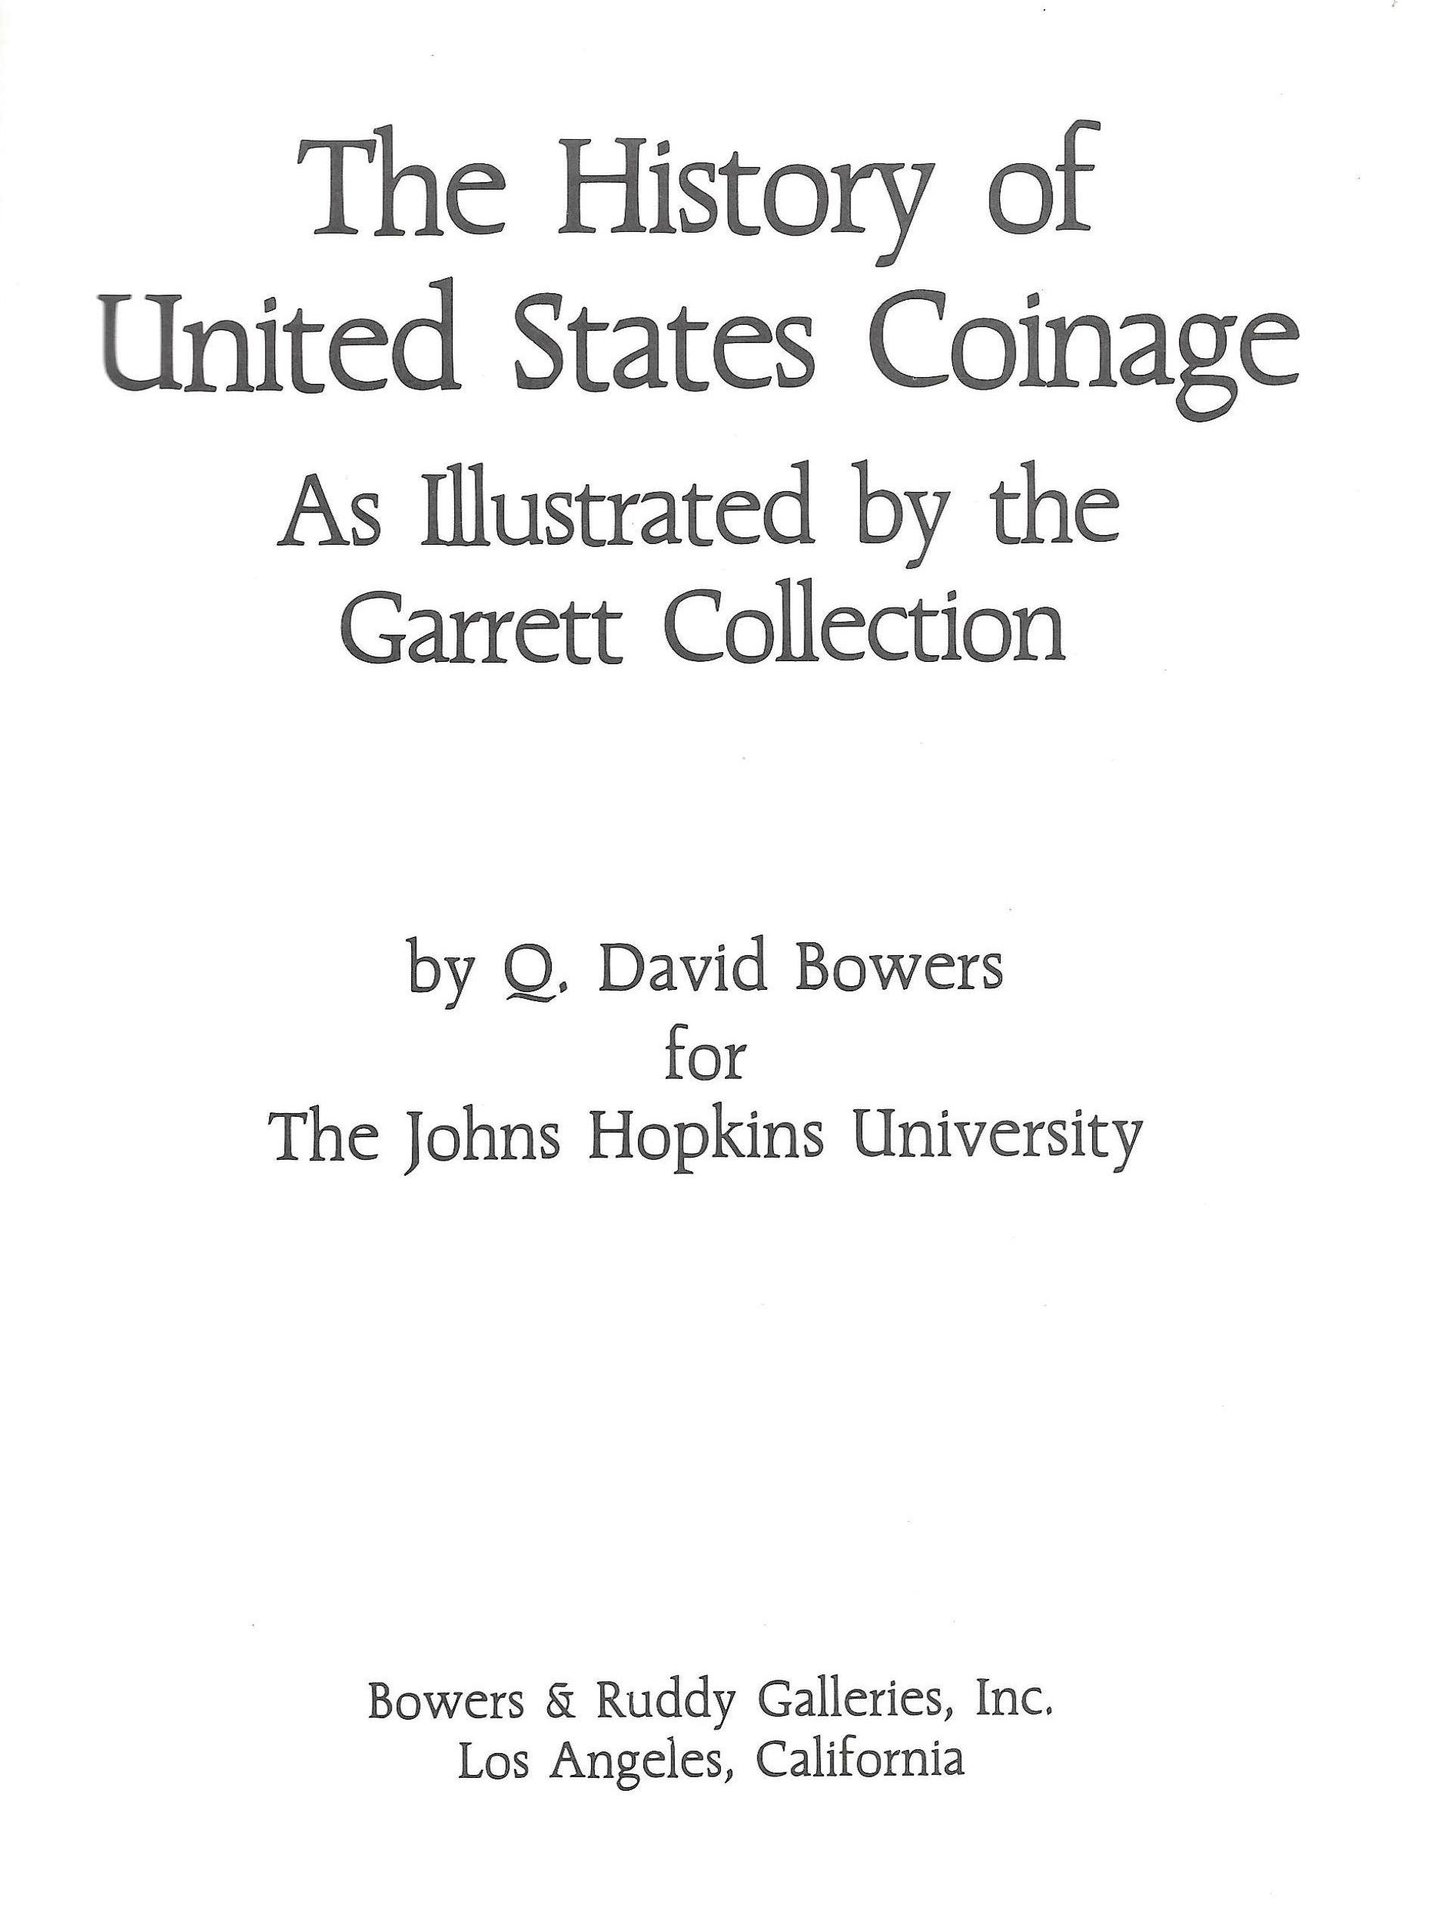 garrett_collection_title-page.jpg